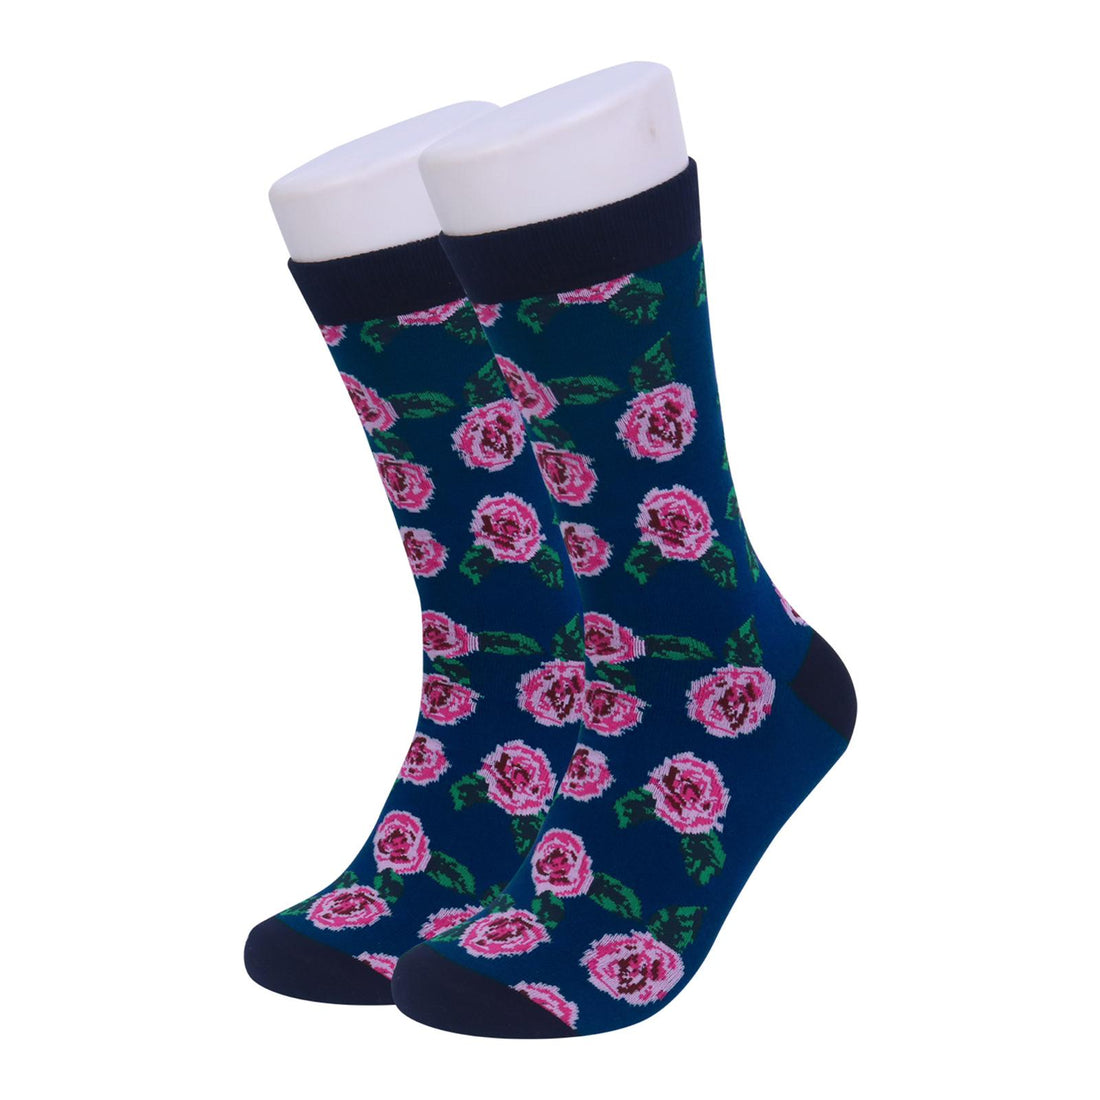 Dress socks - Rose and Blue - Sock by Urbbana